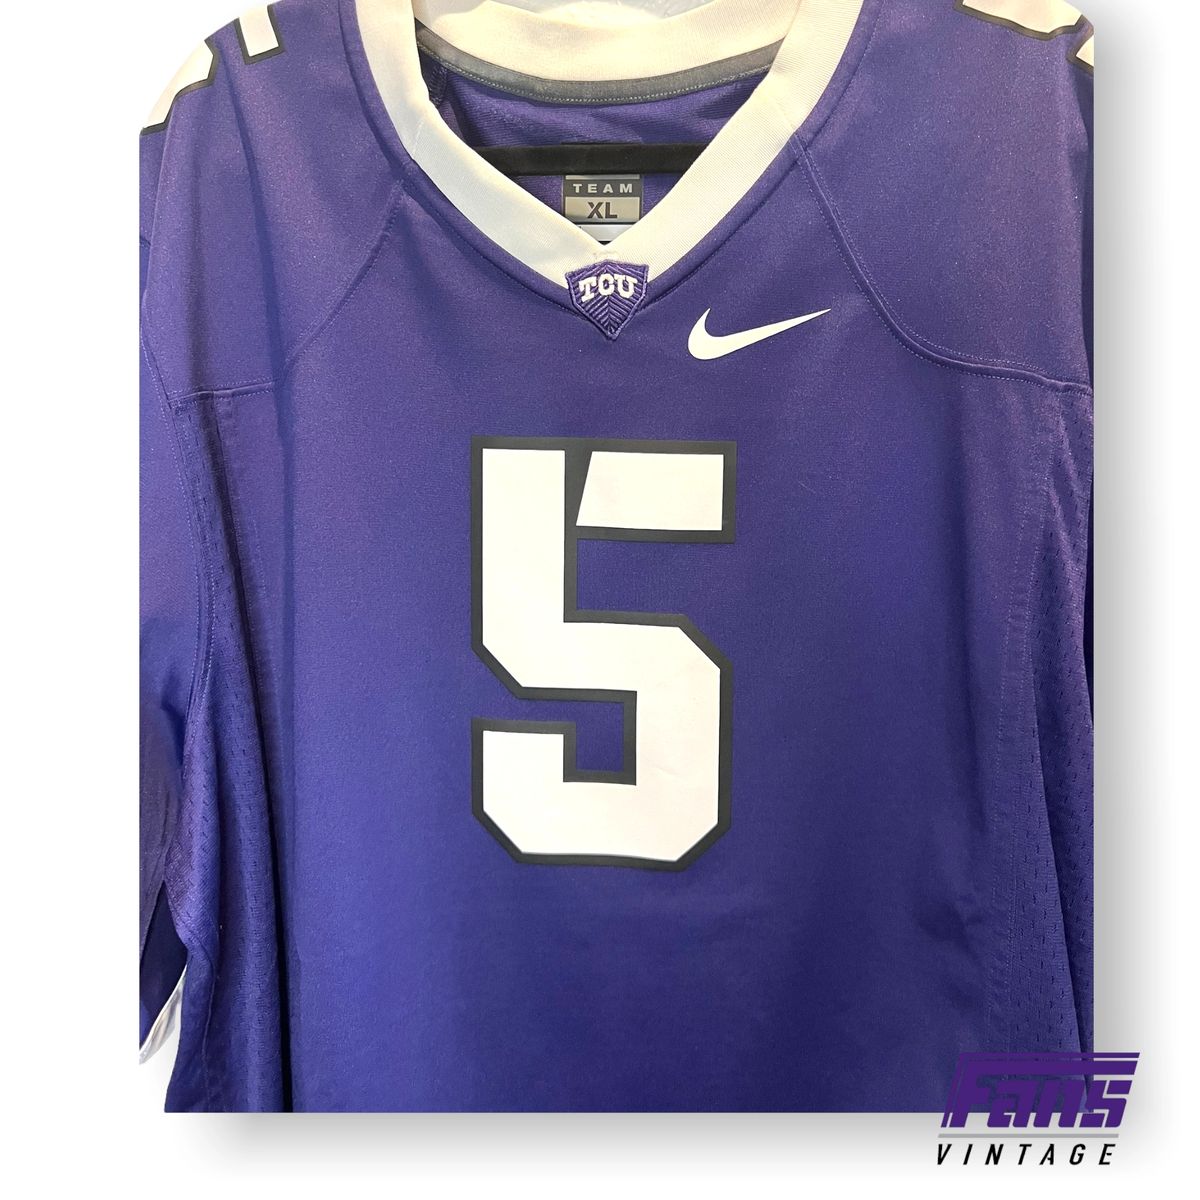 Legends Edition 2014 TCU Football LaDainian Tomlinson Jersey (Solid Purple)